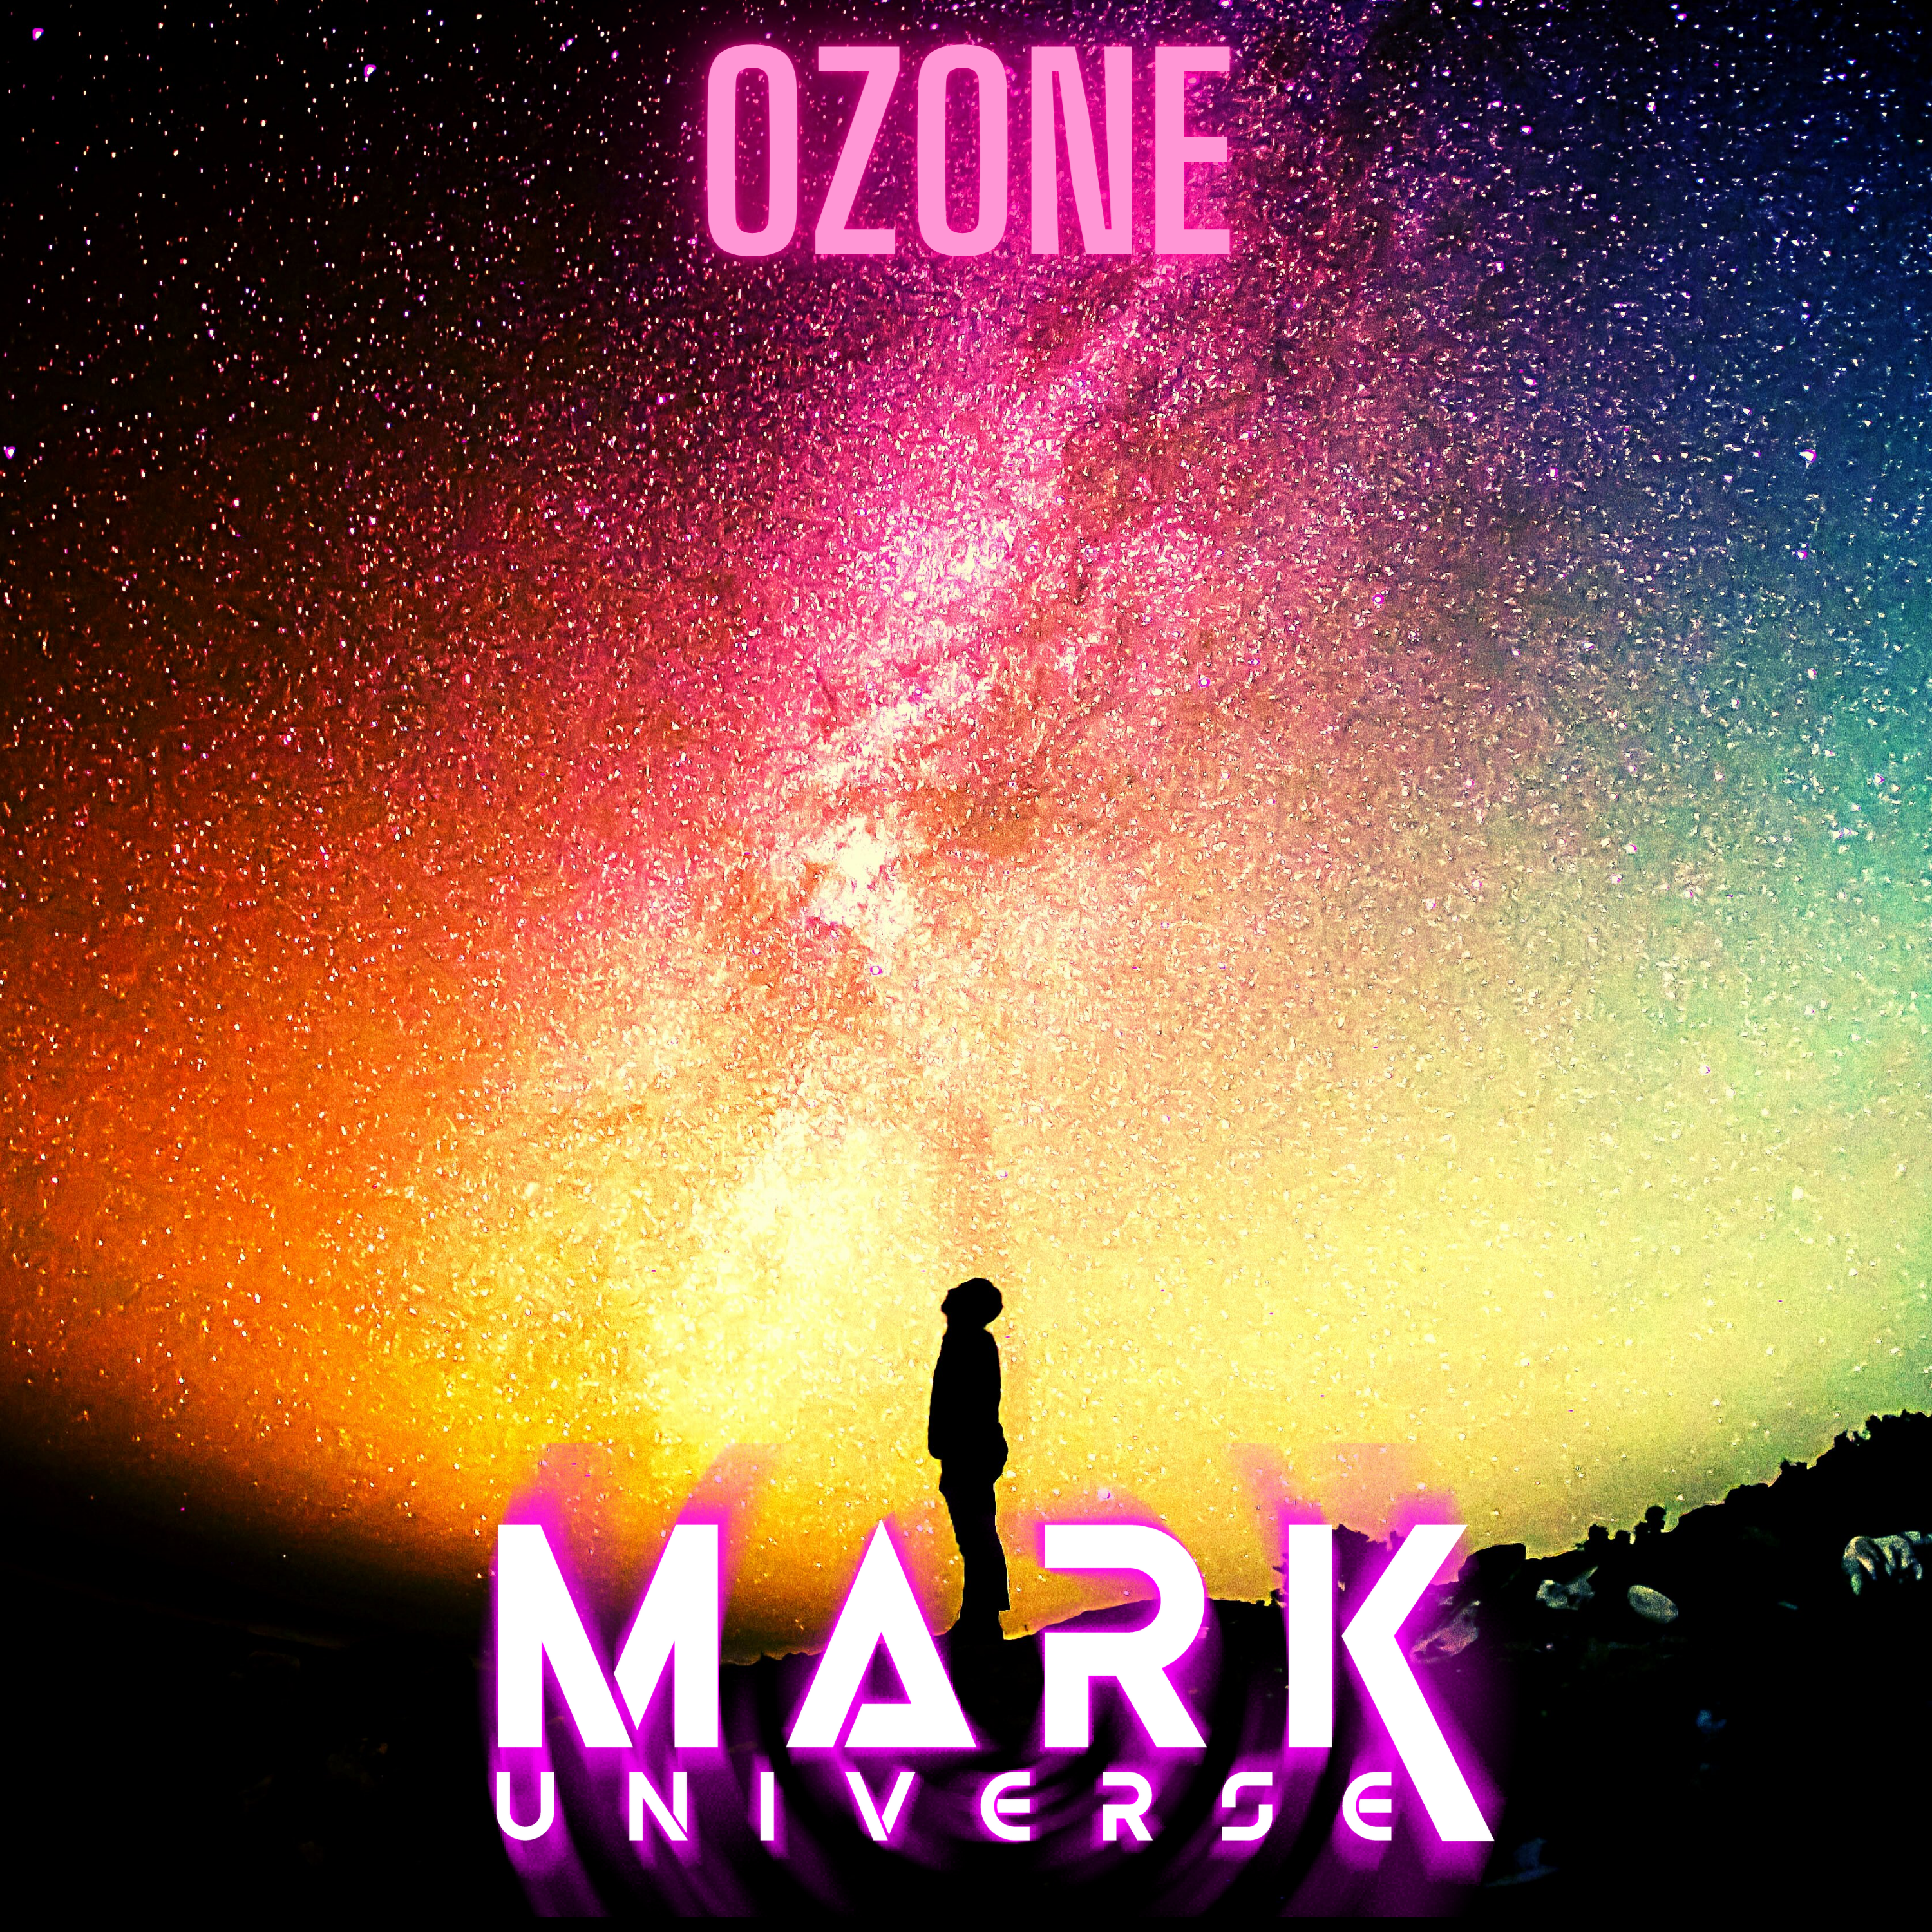 Mark Universe – Ozone (Album Review)